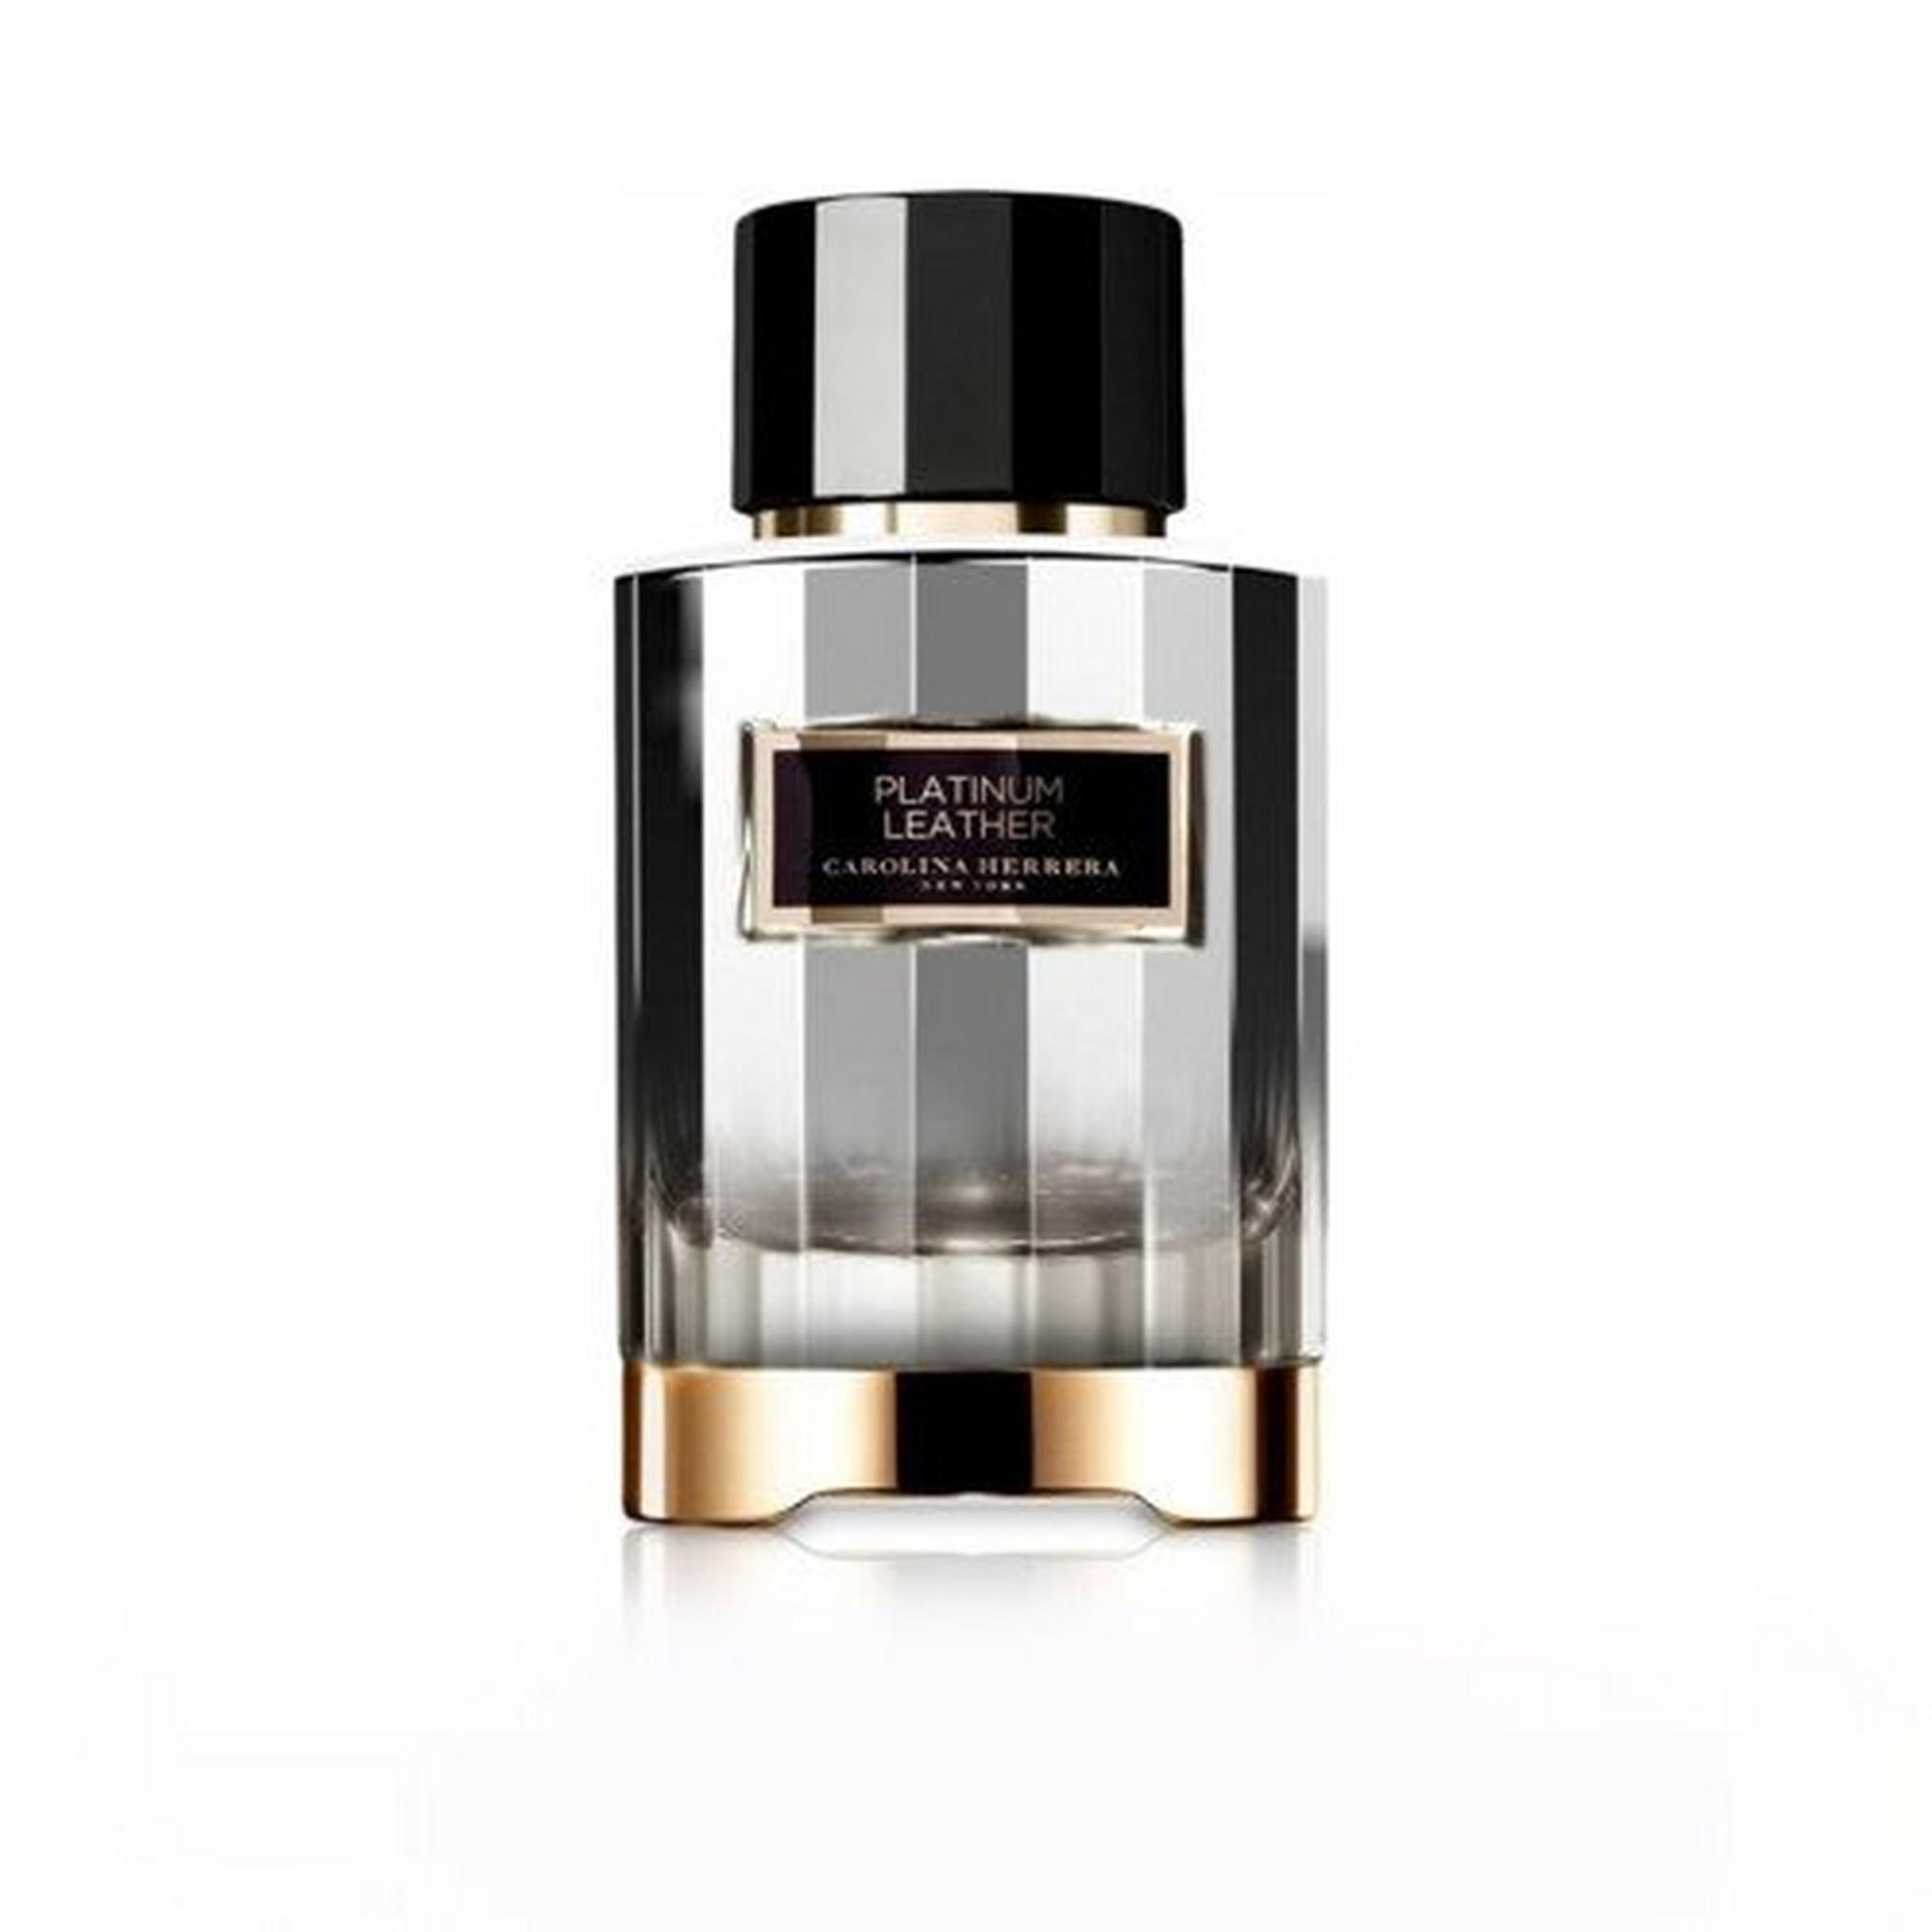 CAROLINA HERRERA Platinum Leather - Eau De Parfum 100 ml